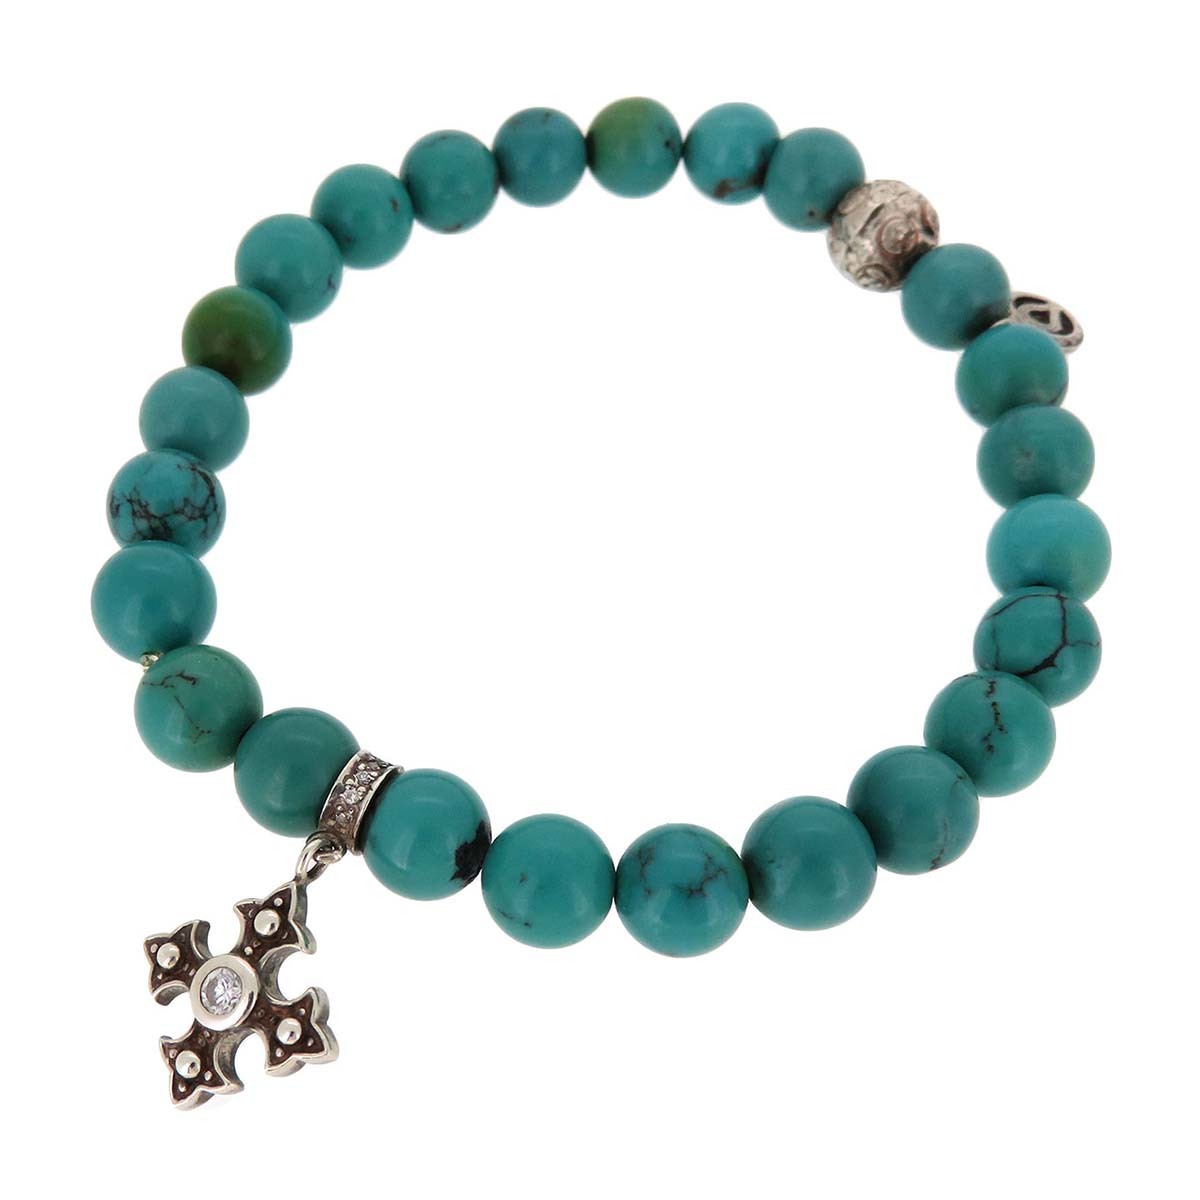  Loree Rodkin fancy Cross silver charm turquoise bracele used [ apparel * small articles ]